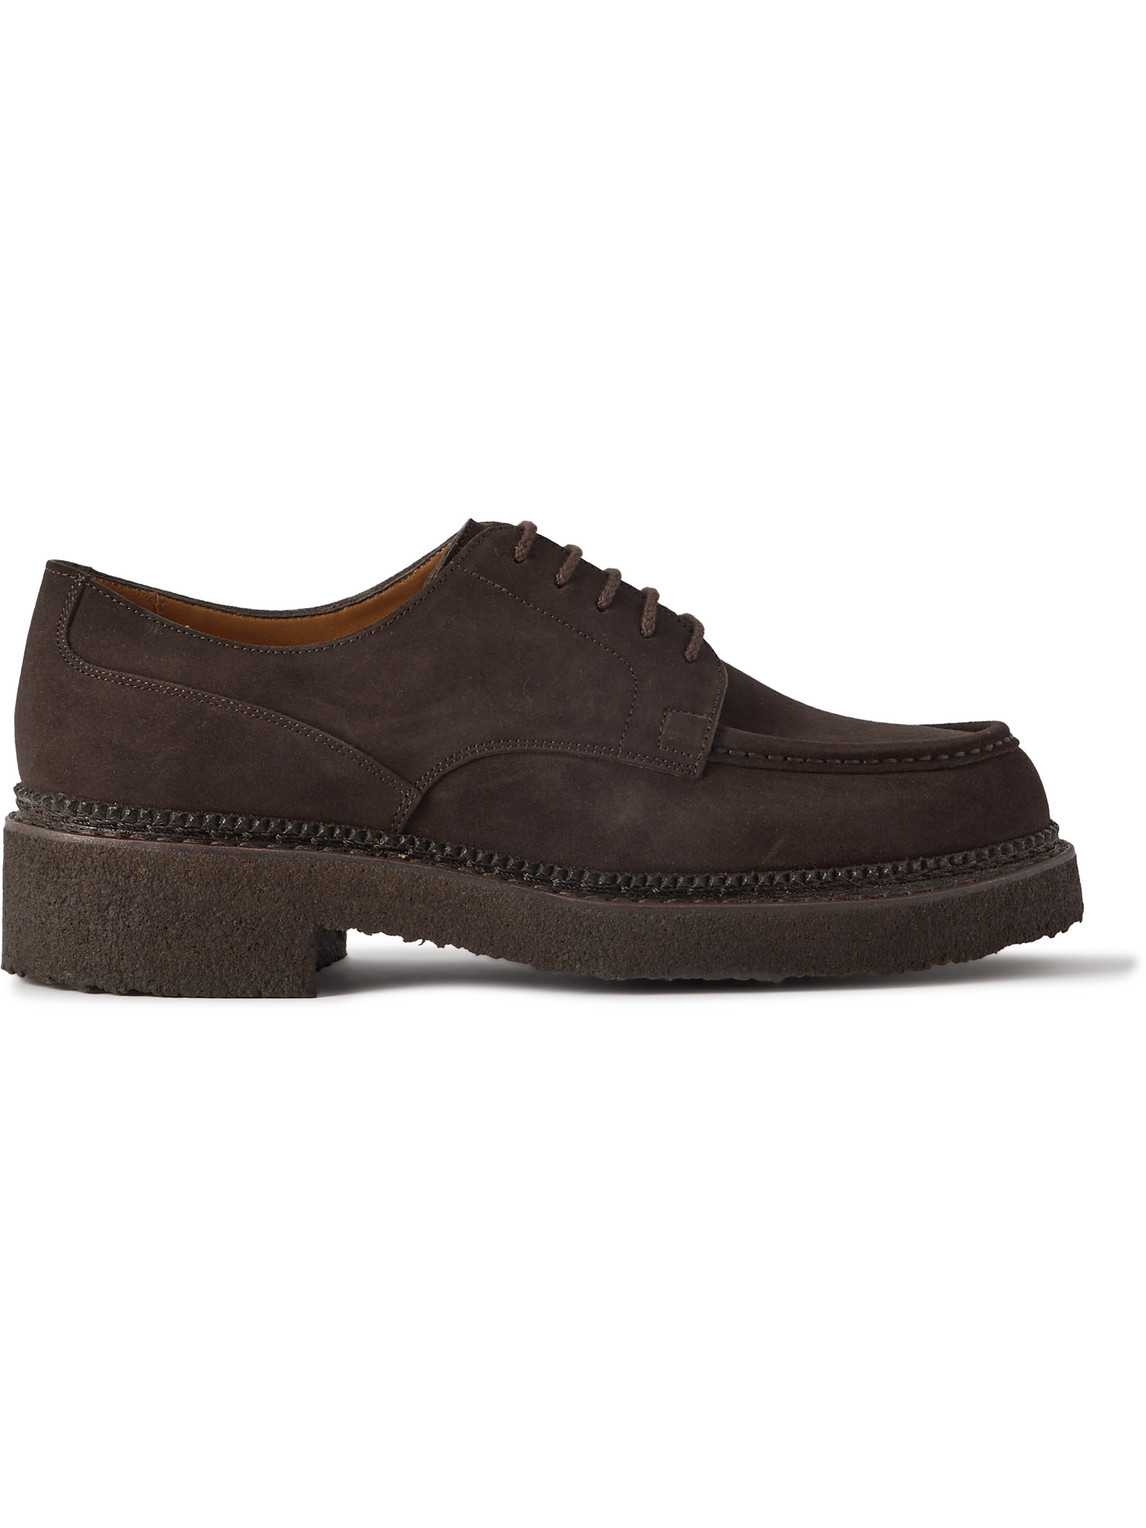 Jm Weston Eugene Suede Derby Shoes In Brown